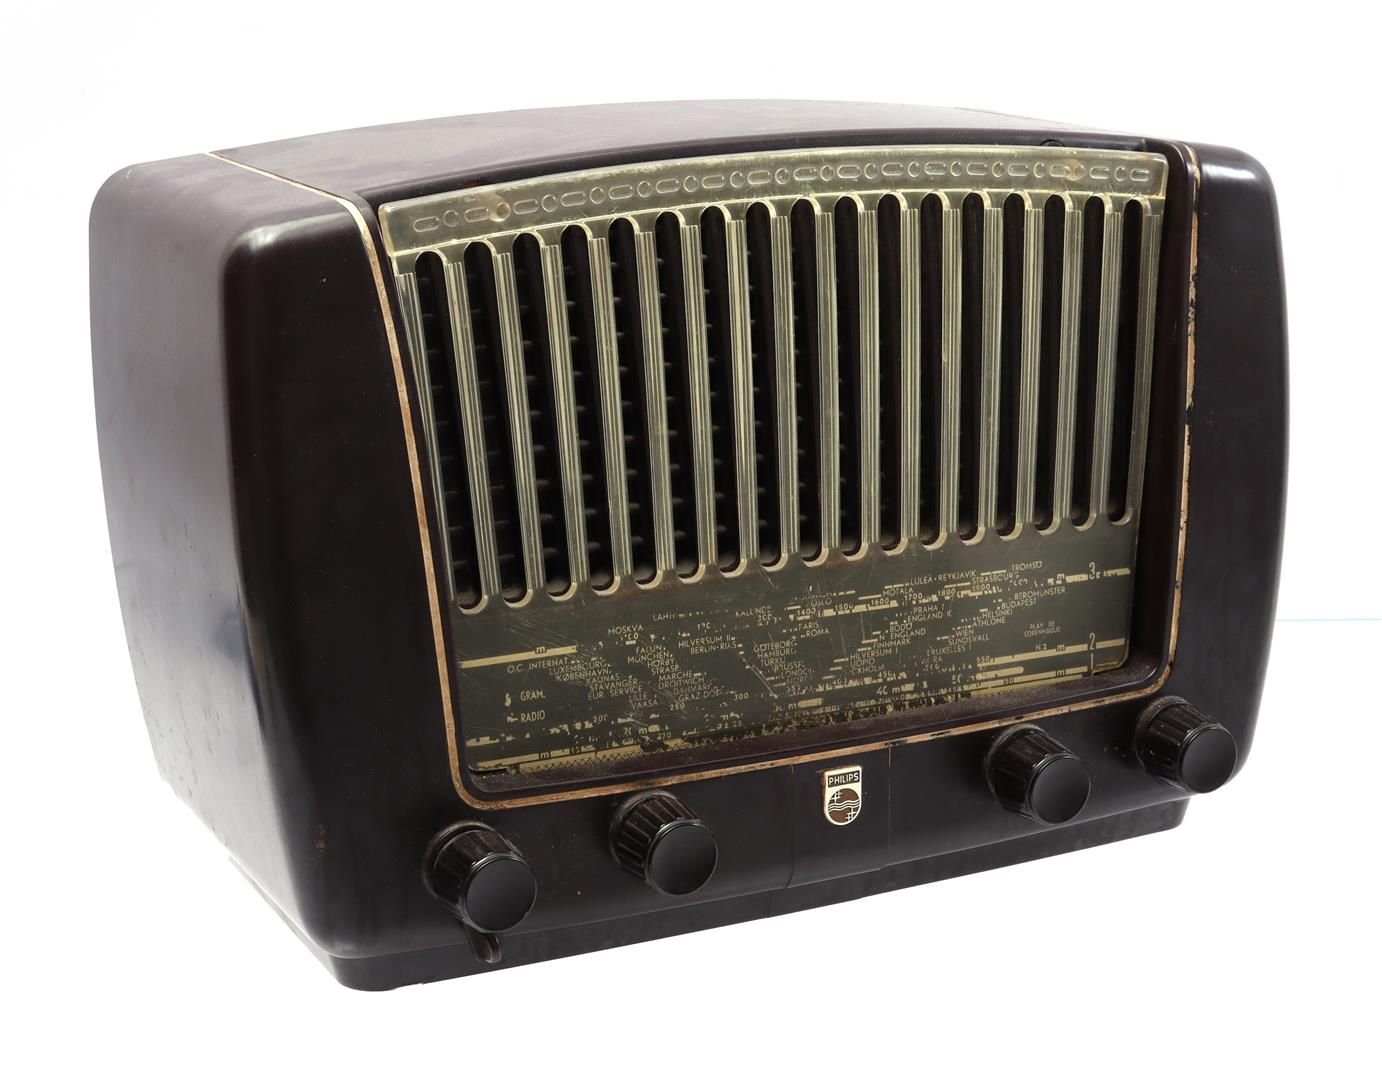 Philips BX310 bakelite radio Philips BX310 bakelite radio, 37 cm wide